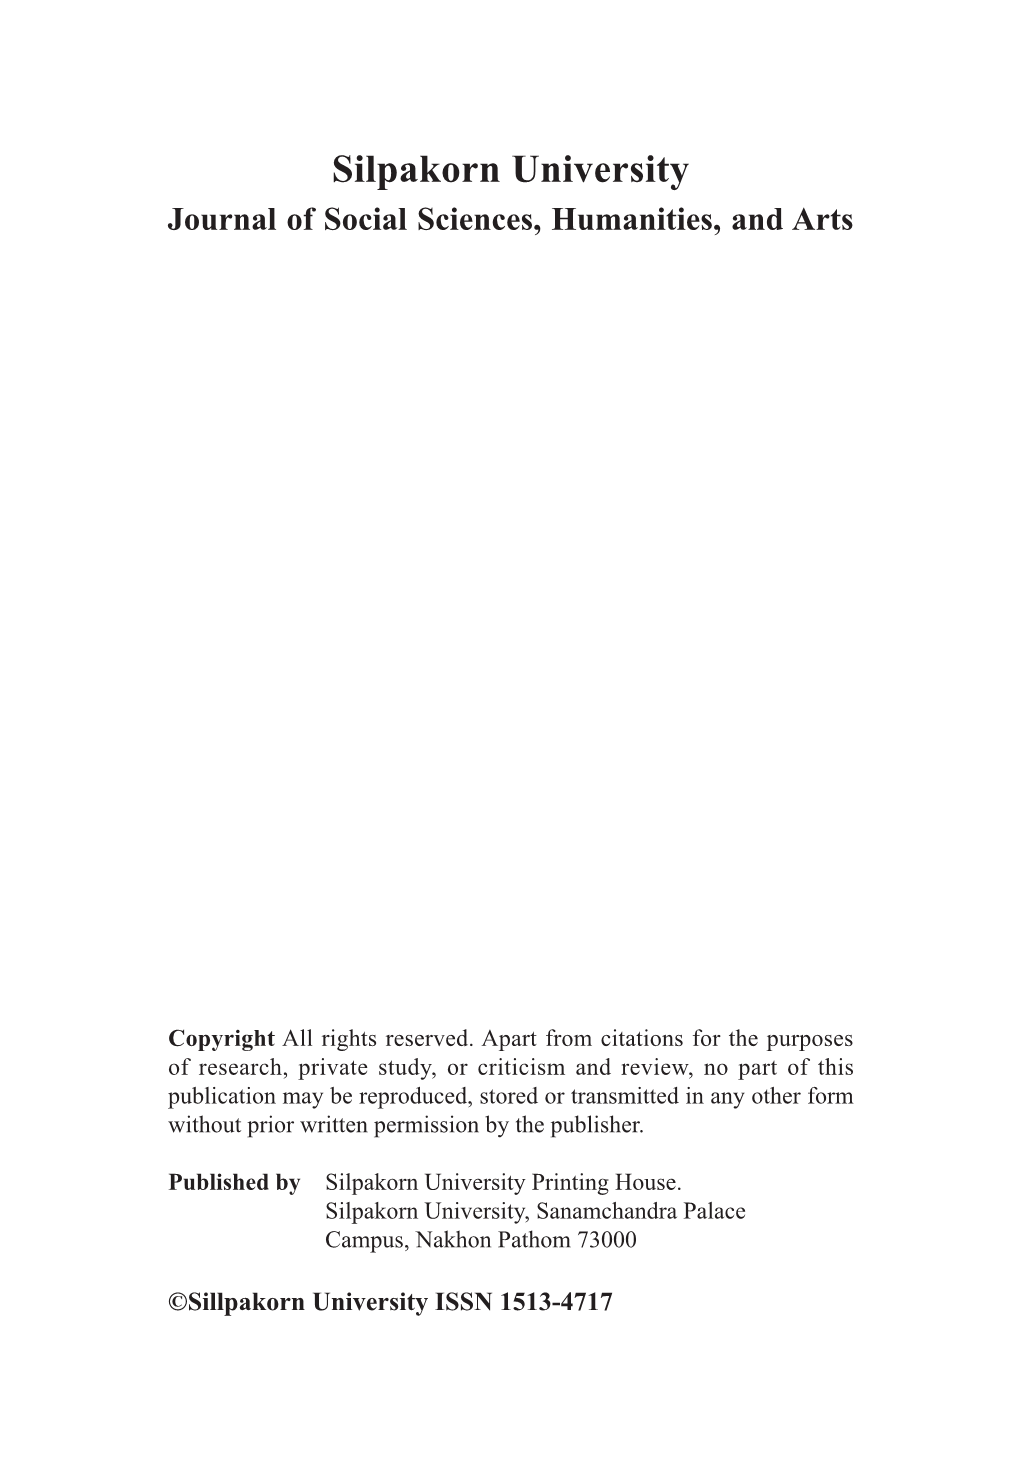 Silpakorn University Journal of Social Sciences, Humanities, and Arts